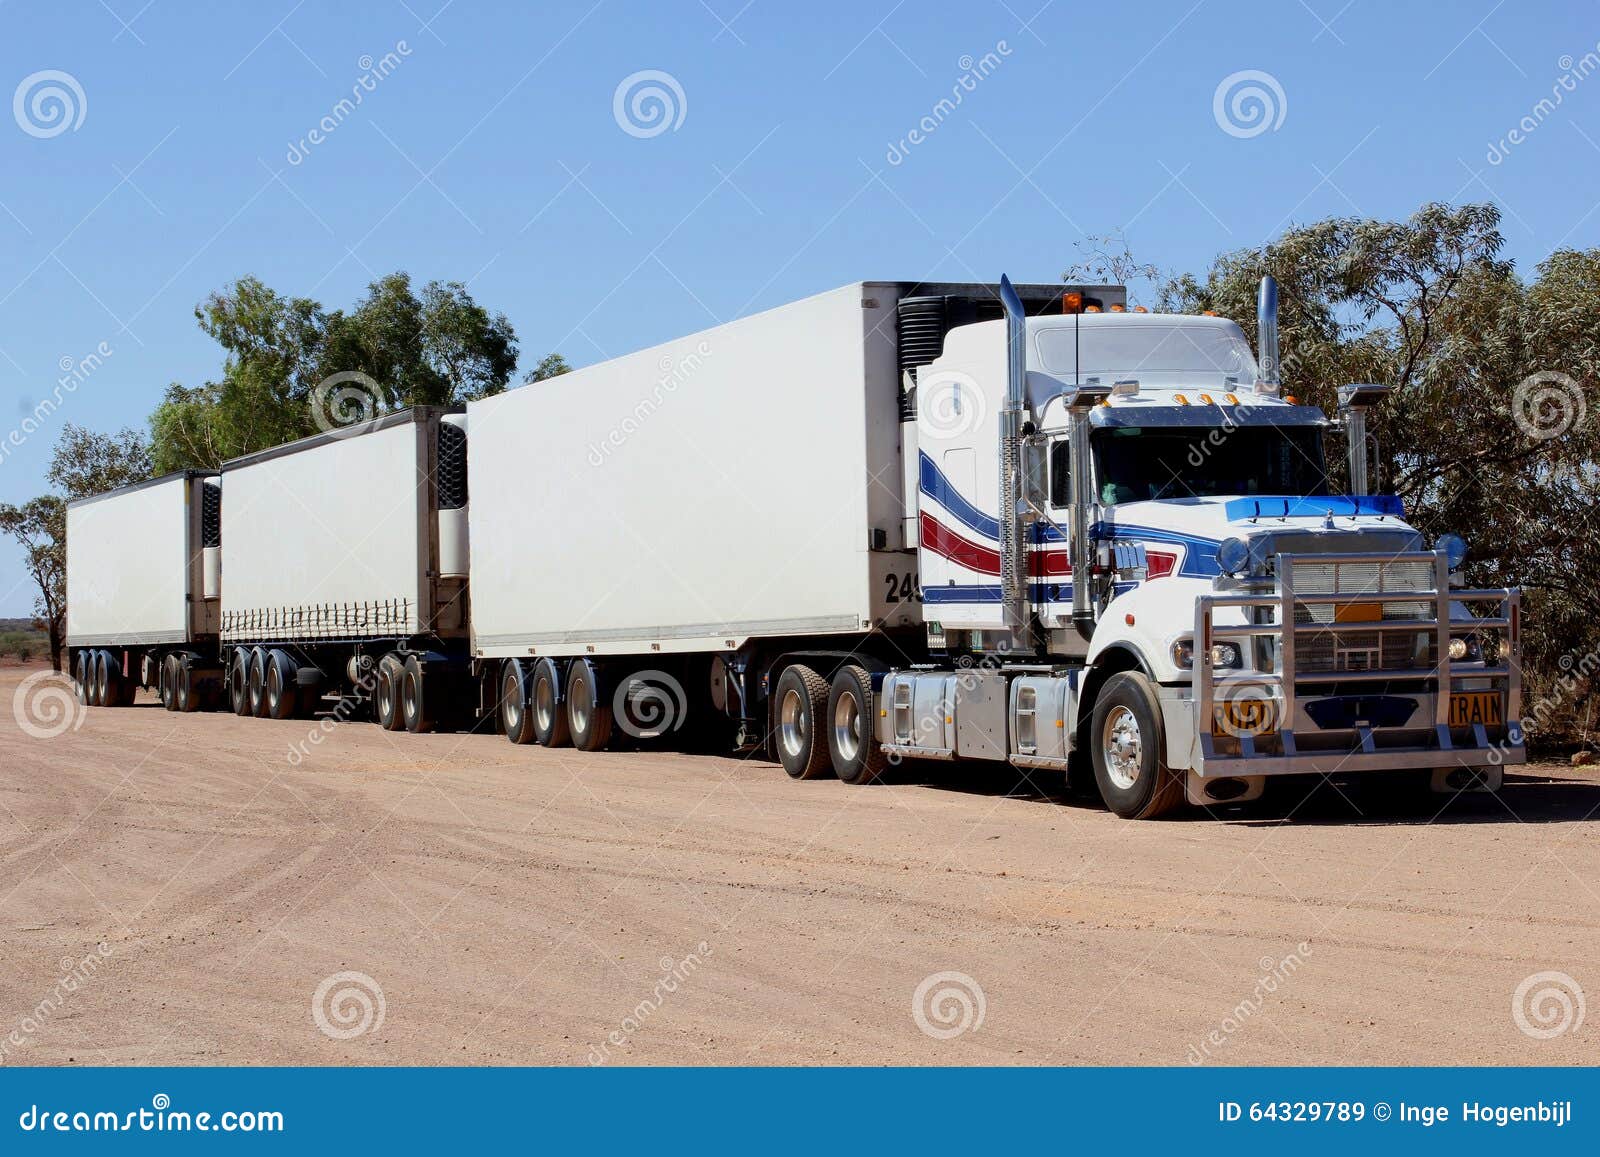 skinke kryds Quilt Heavy Freight Truck Trailer Transport by Road Train in Australia Stock  Image - Image of highway, diesel: 64329789